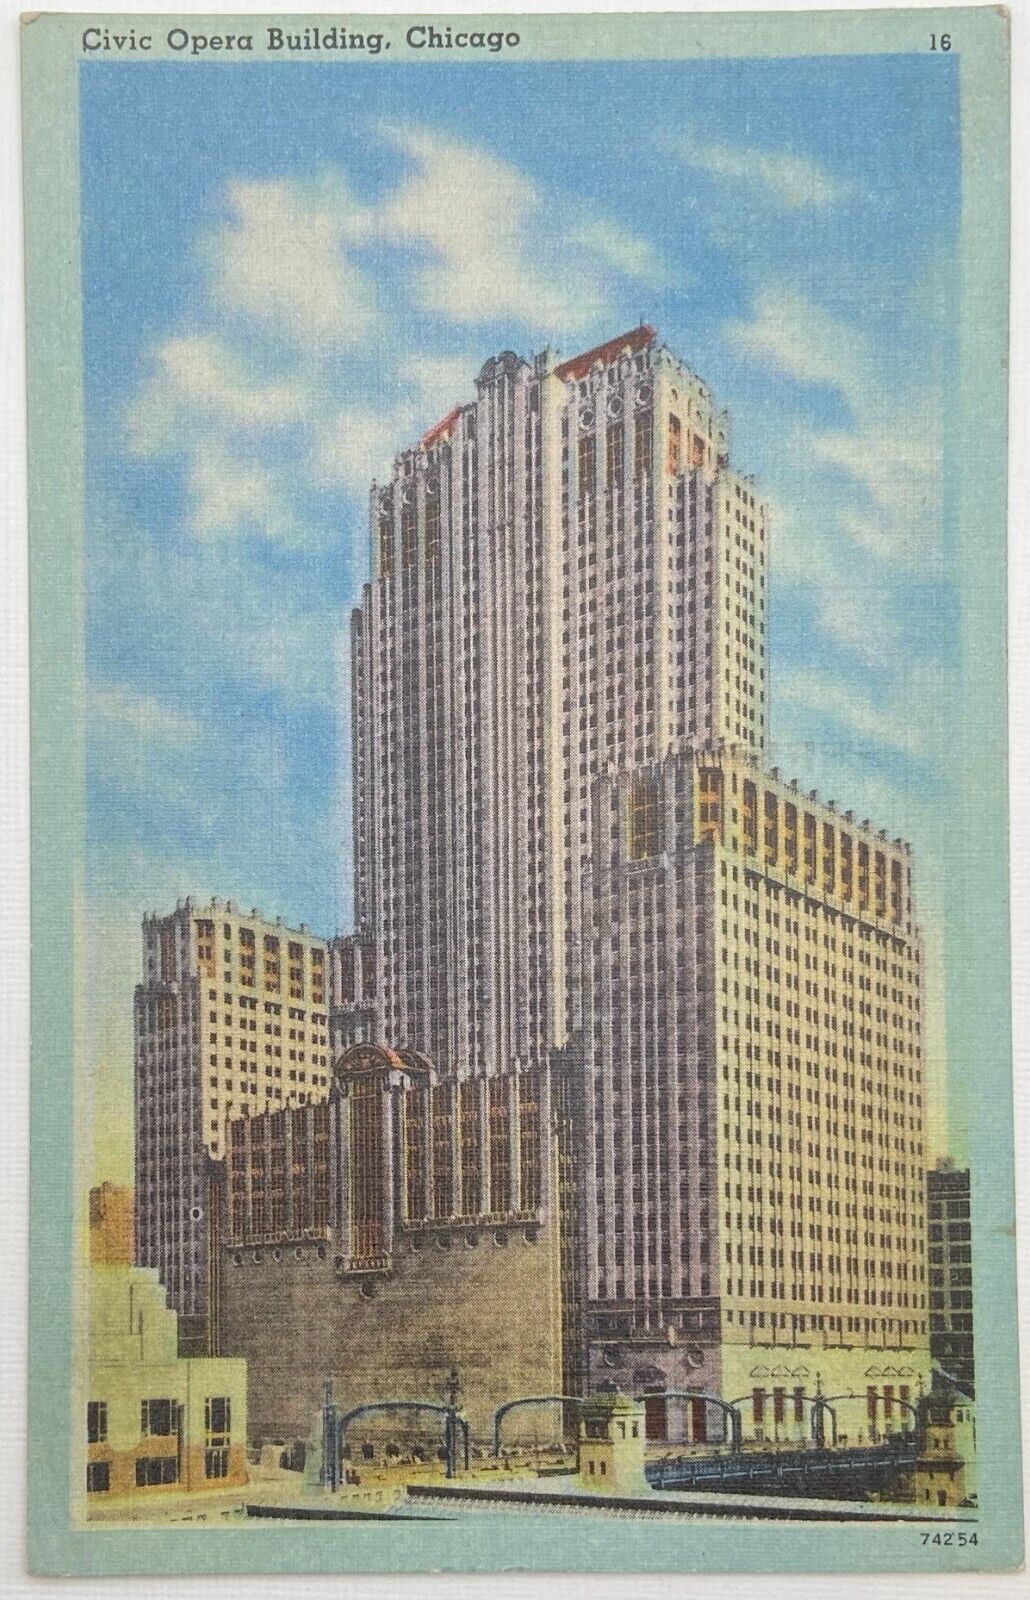 Civic Opera Building Chicago, Illinois Vintage Linen Postcard c1949